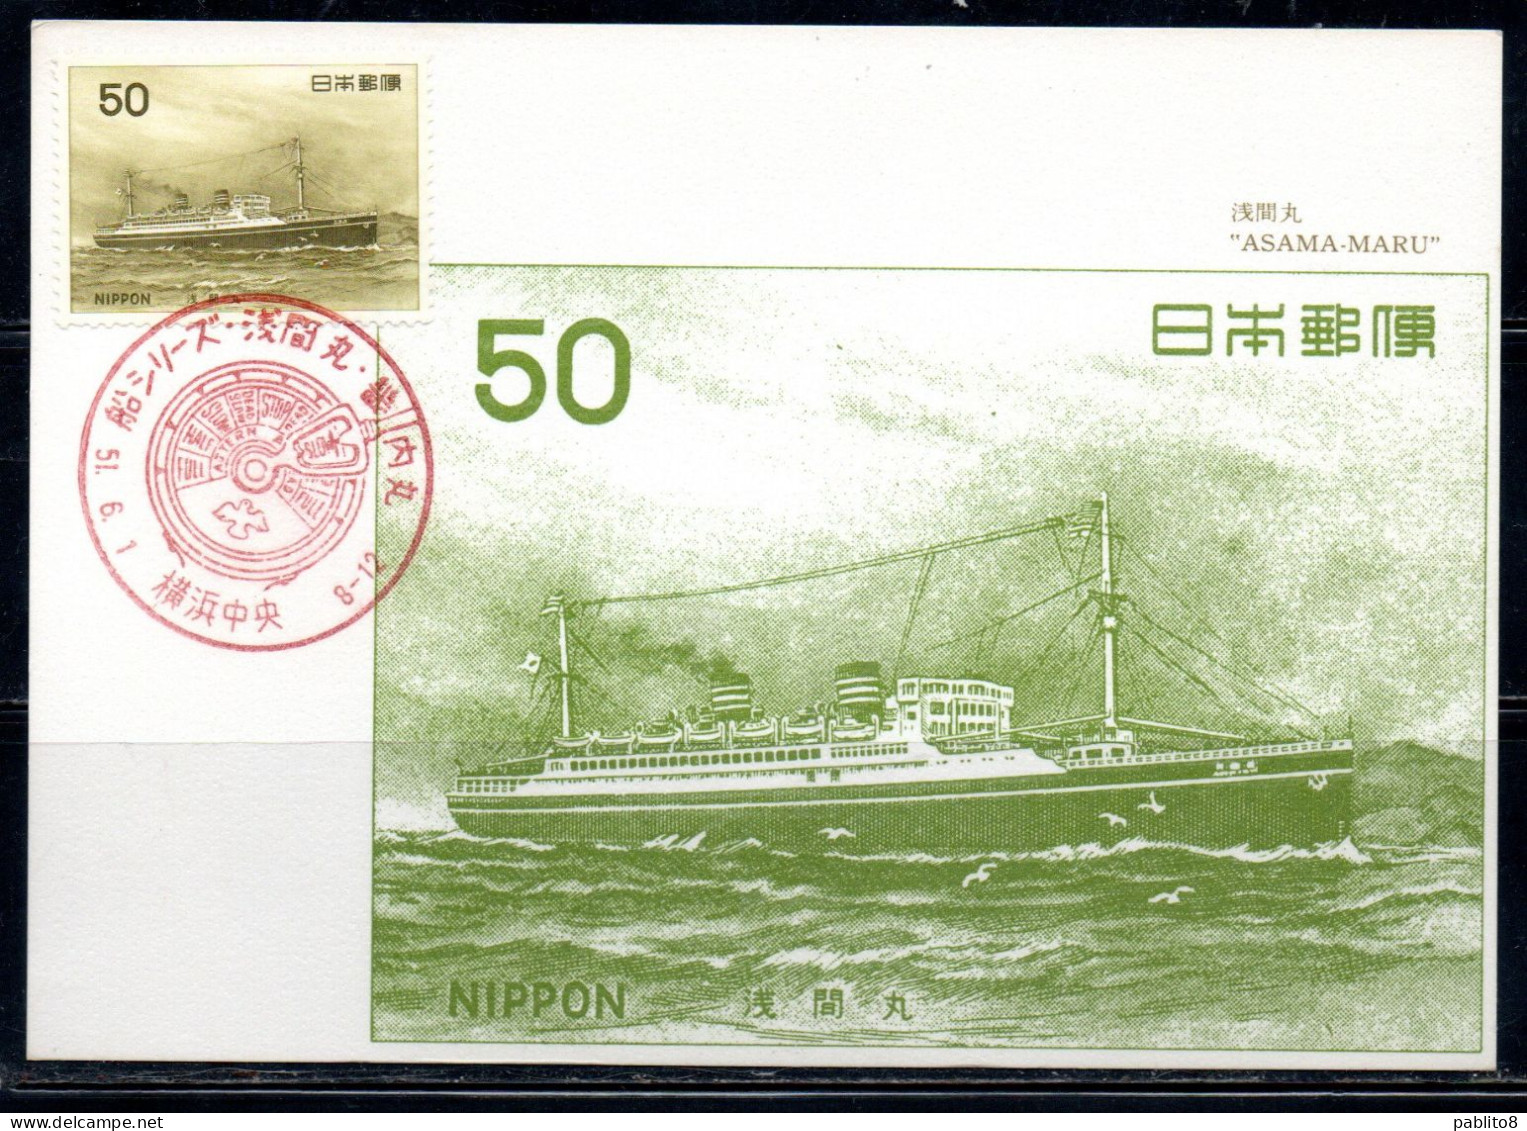 JAPAN GIAPPONE 1975 1976 HISTORIC SHIPS ISSUE ASAMA-MARU SHIP 50y MAXI MAXIMUM CARD - Cartoline Maximum